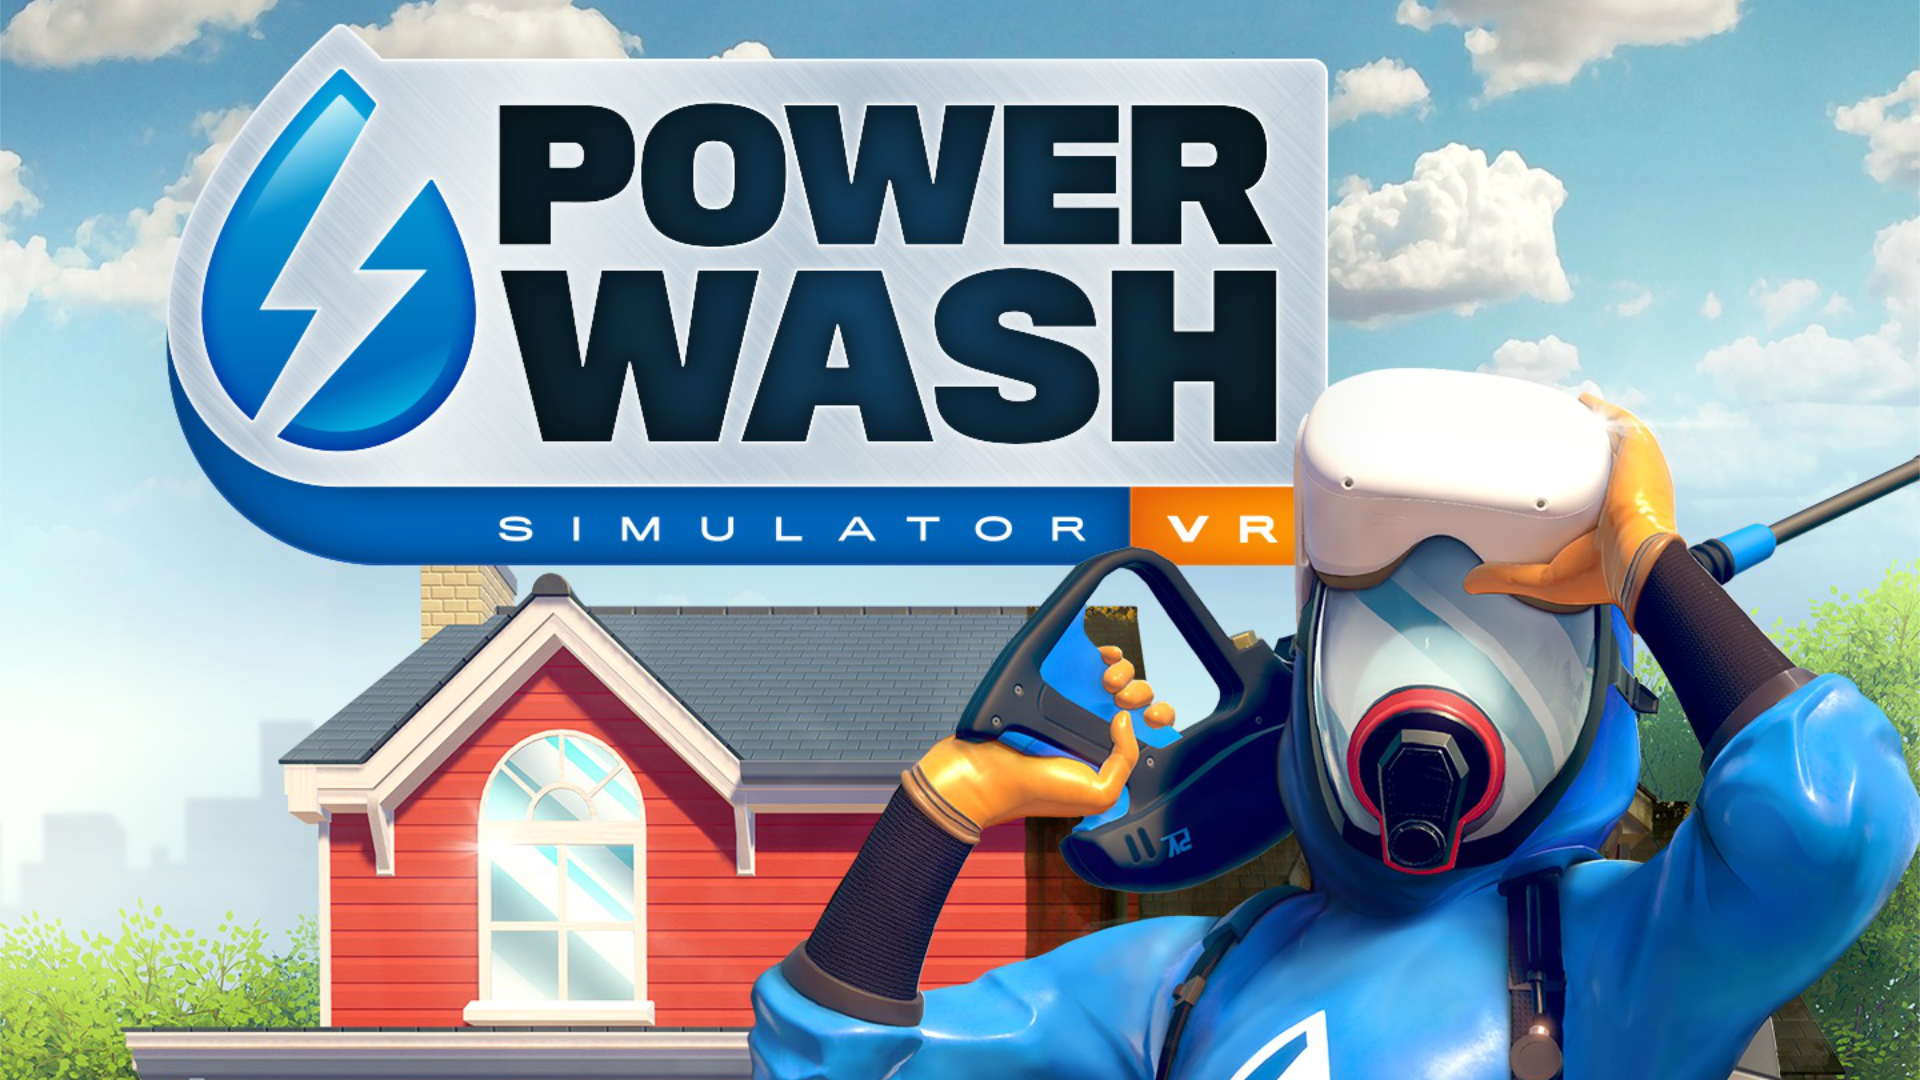 The future of PowerWash Simulator, and developer FuturLab